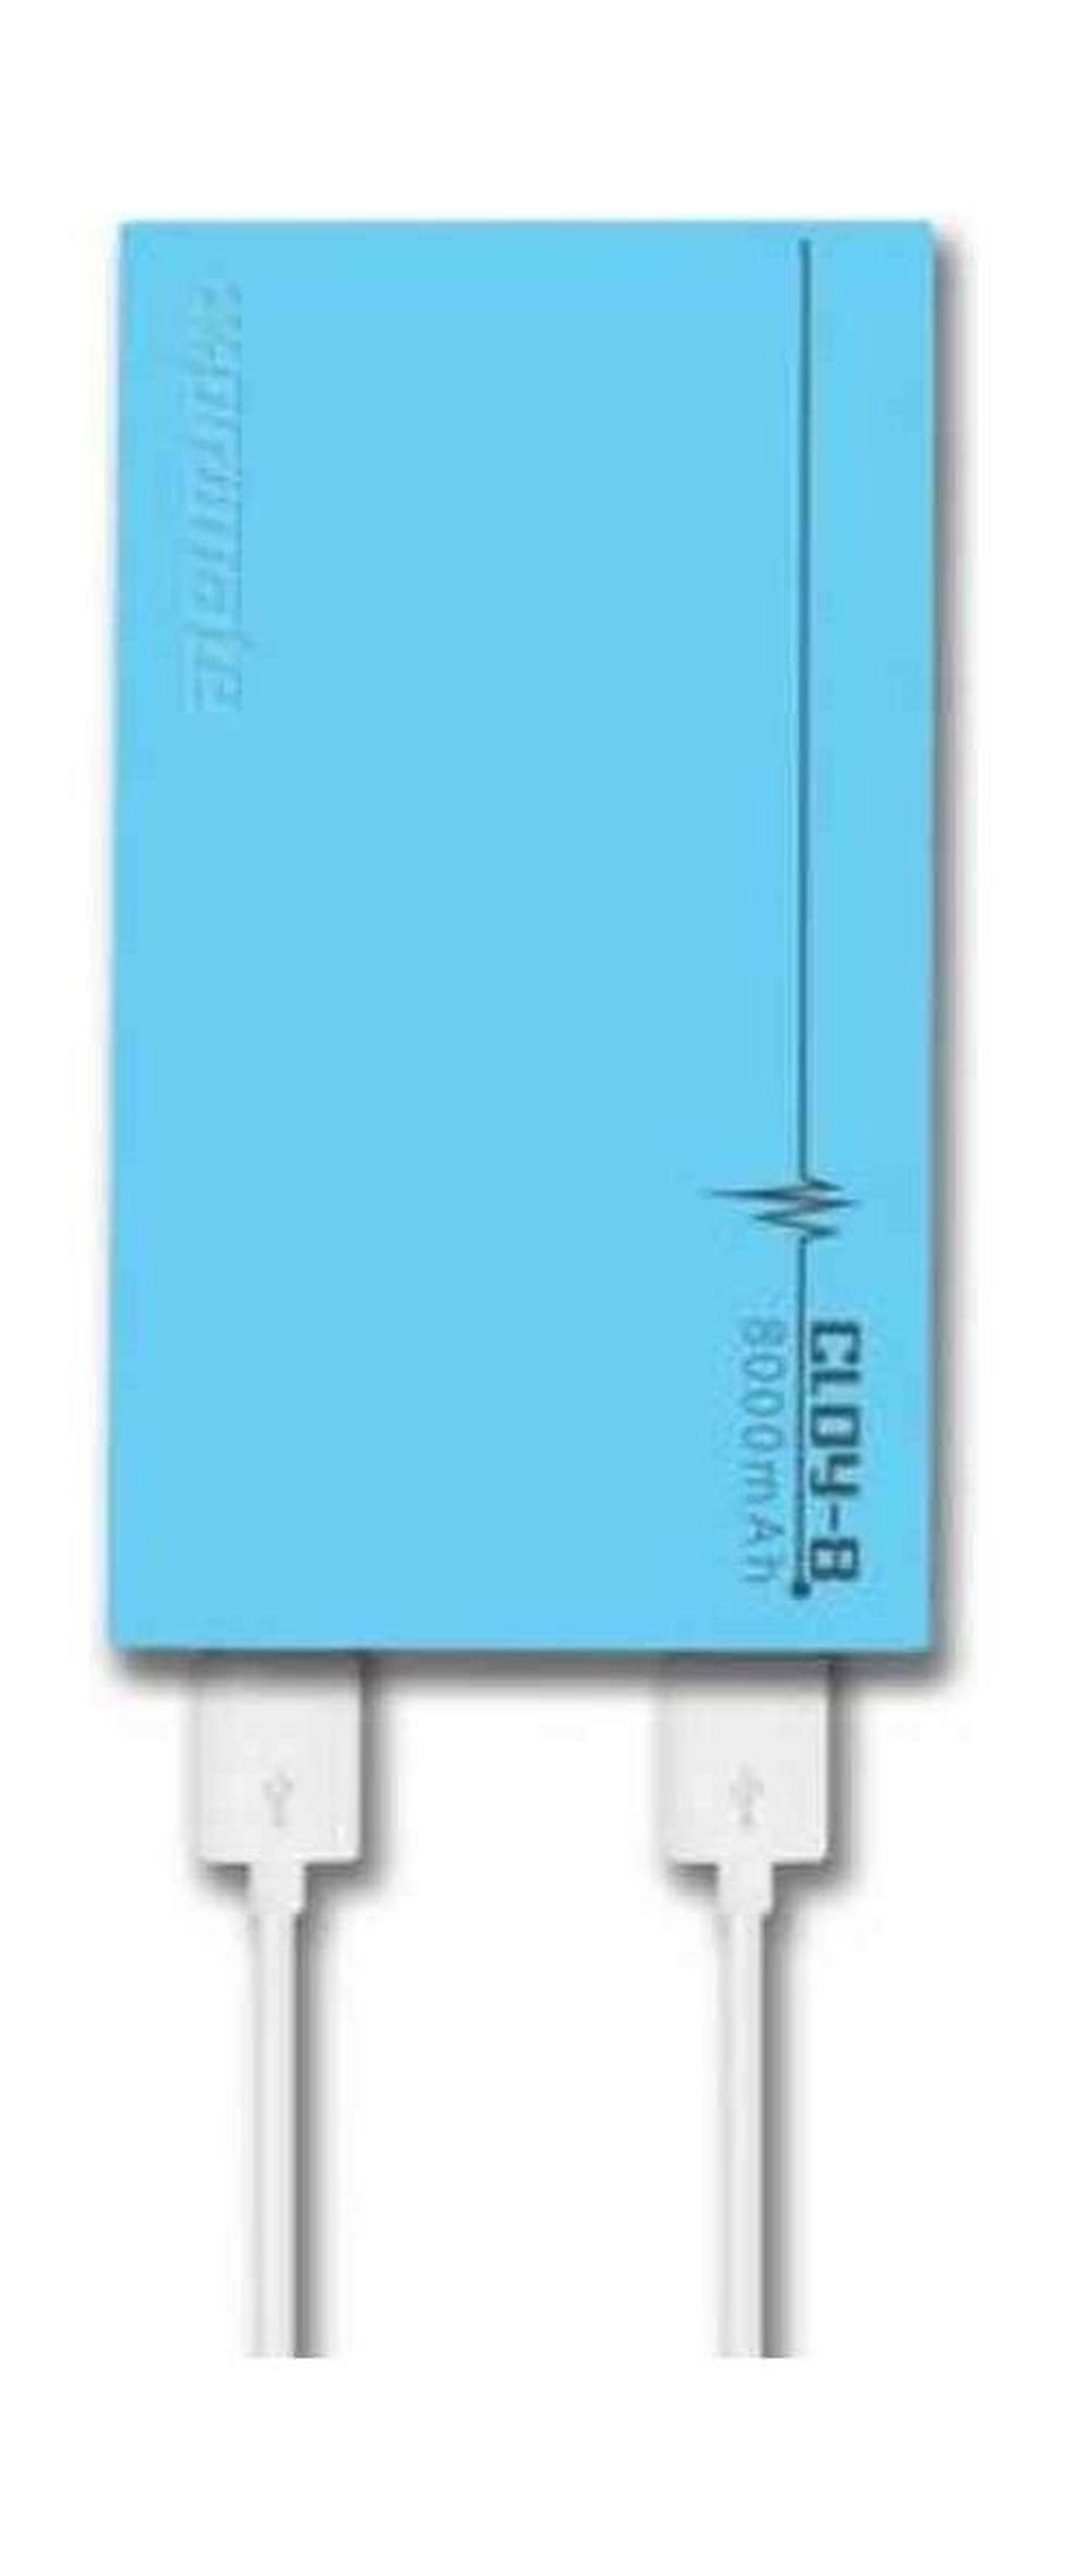 Promate Cloy-8 Premium Dual USB 8000mAh Power Bank - Blue